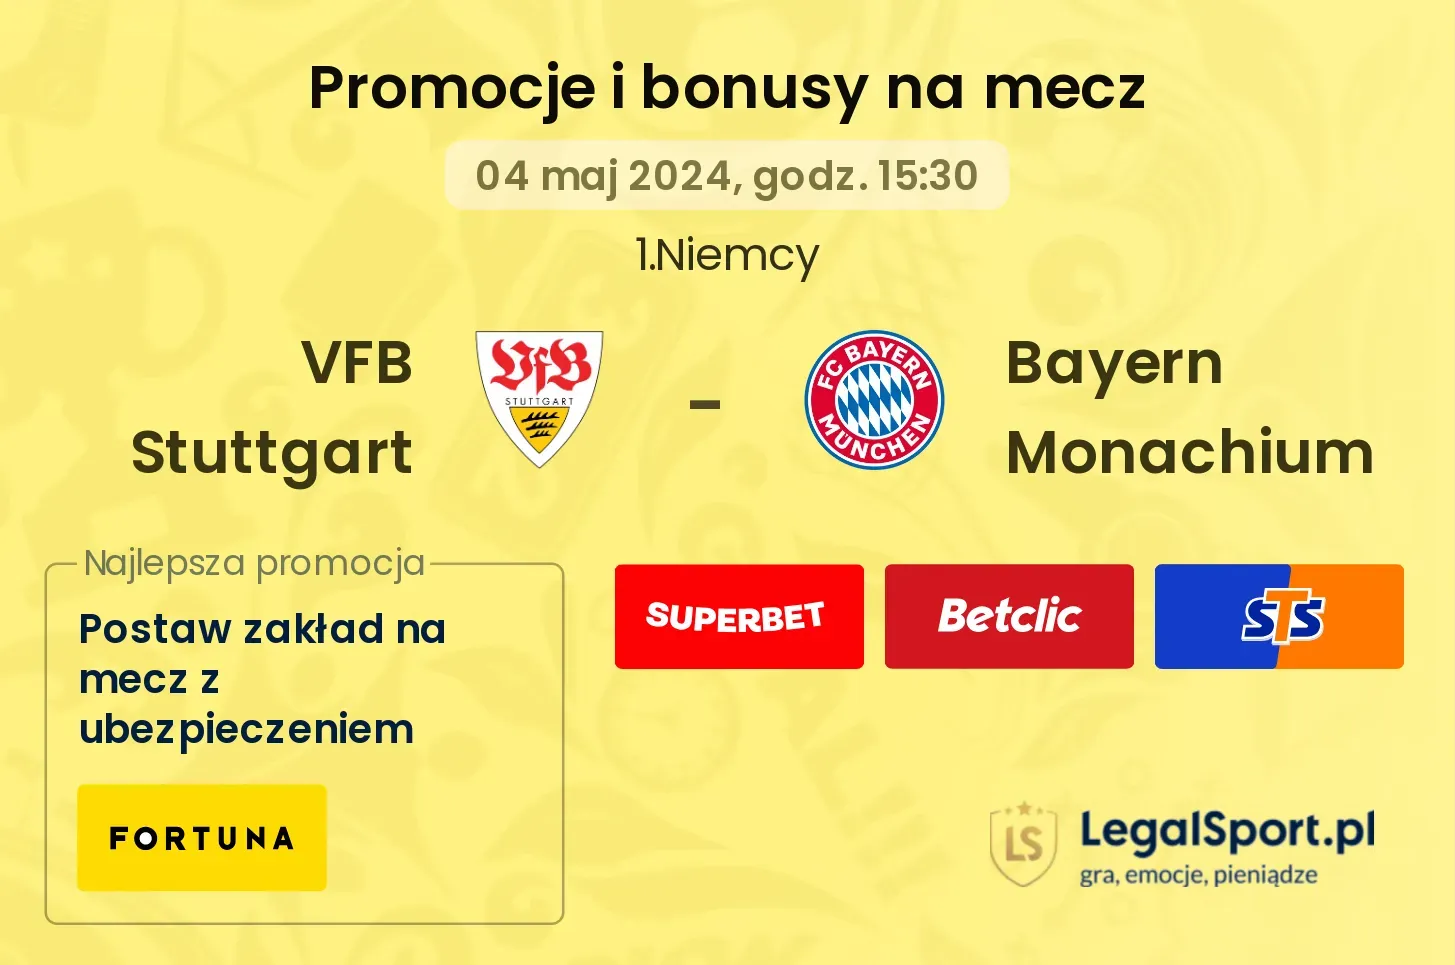 VFB Stuttgart - Bayern Monachium promocje bonusy na mecz